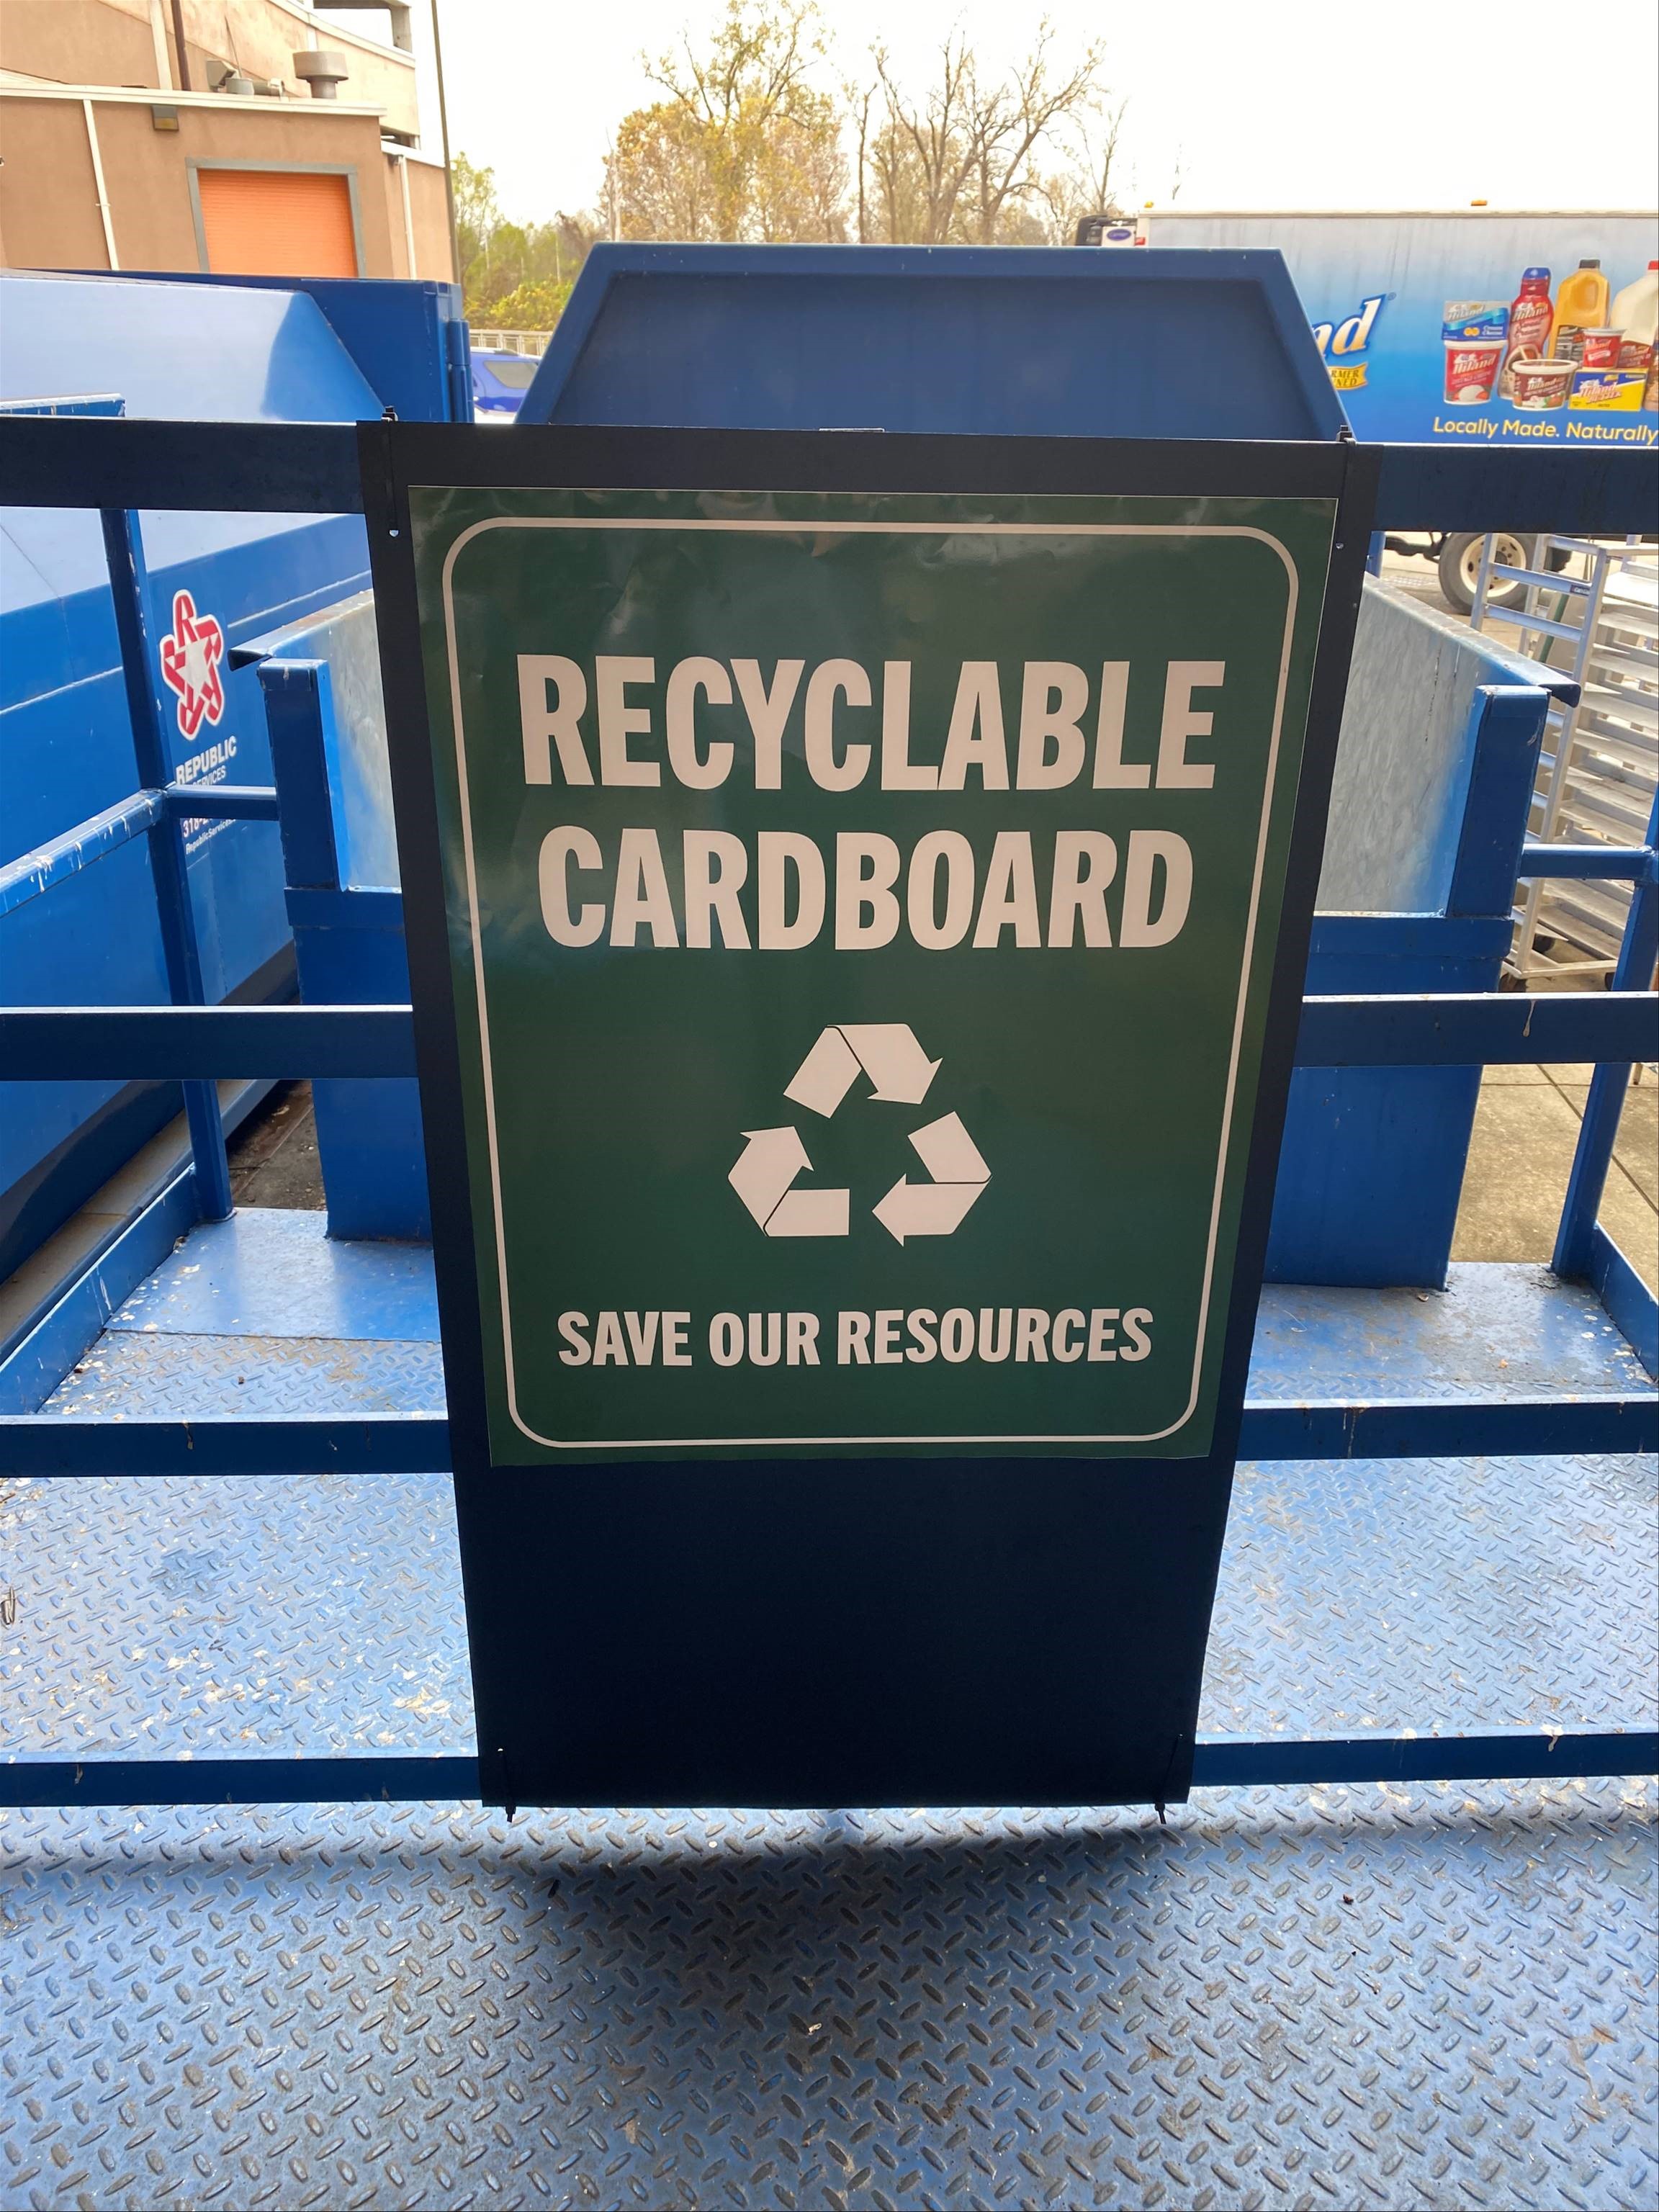 Sam's Town Shreveport's cardboard recycling bins